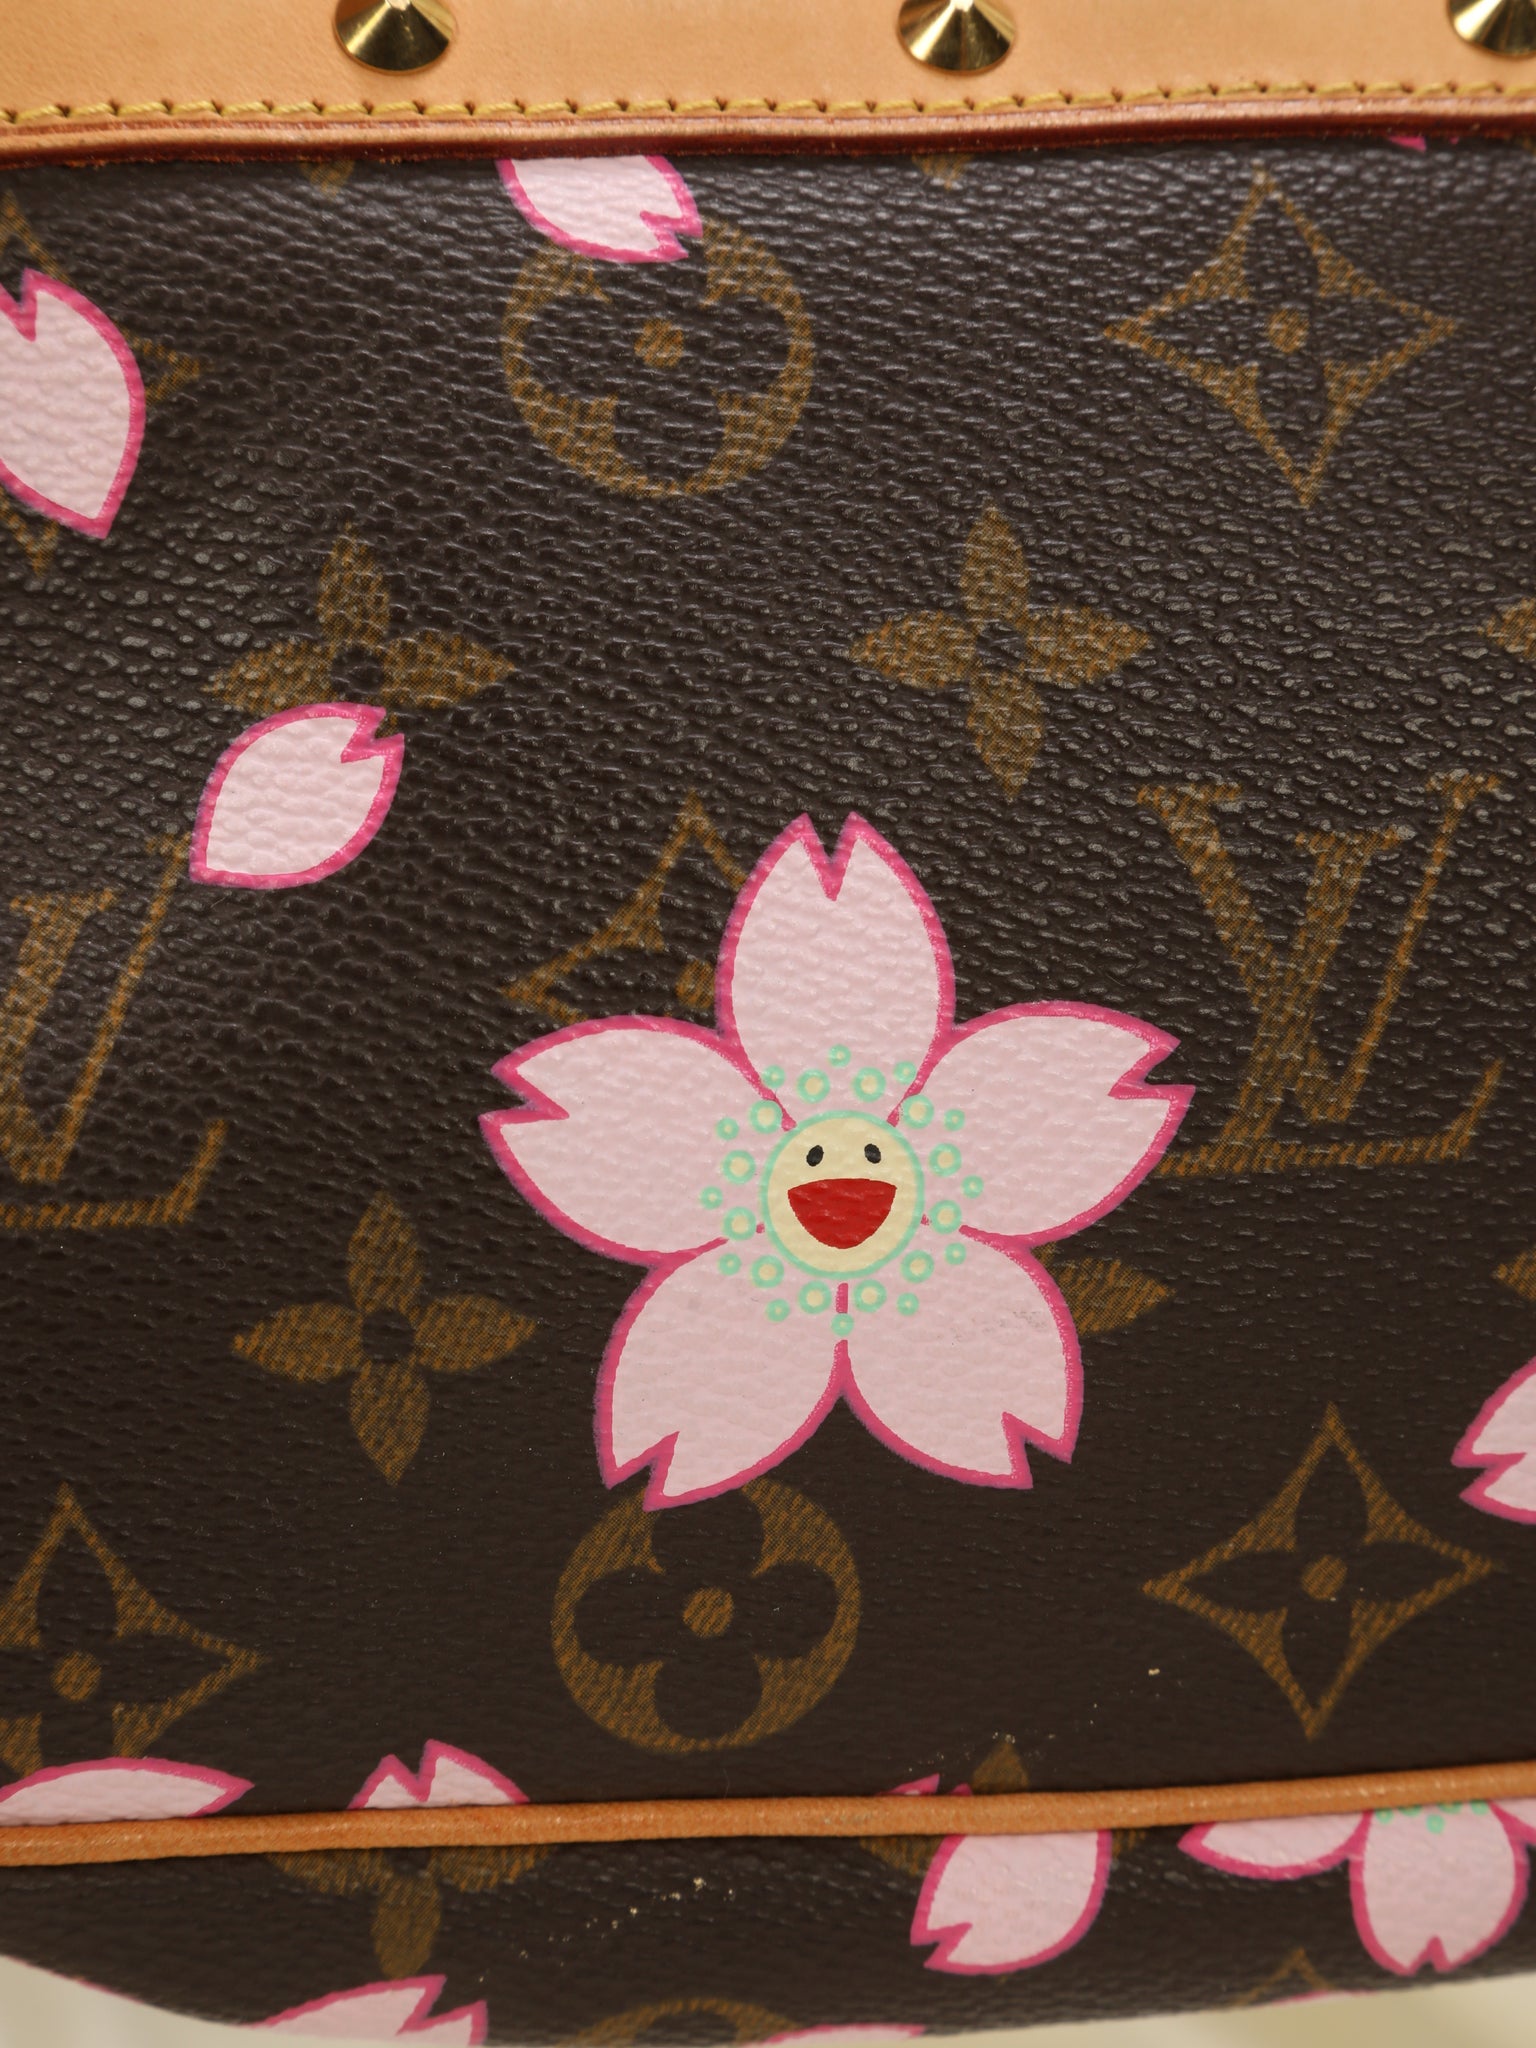 Limited Edition Louis Vuitton x Takashi Murakami Cherry Blossom